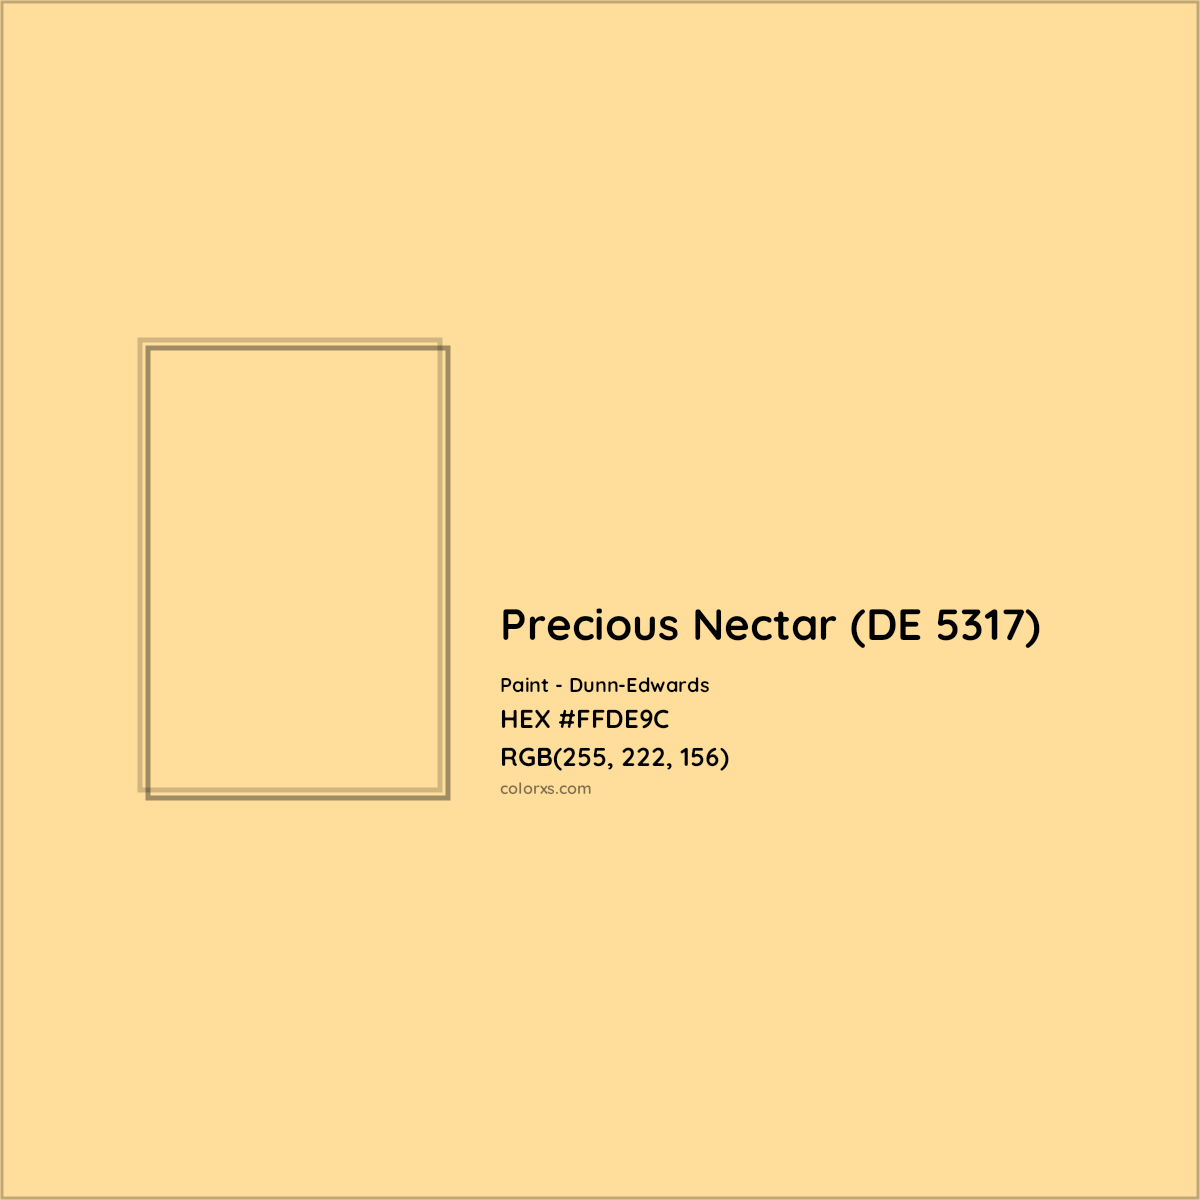 HEX #FFDE9C Precious Nectar (DE 5317) Paint Dunn-Edwards - Color Code